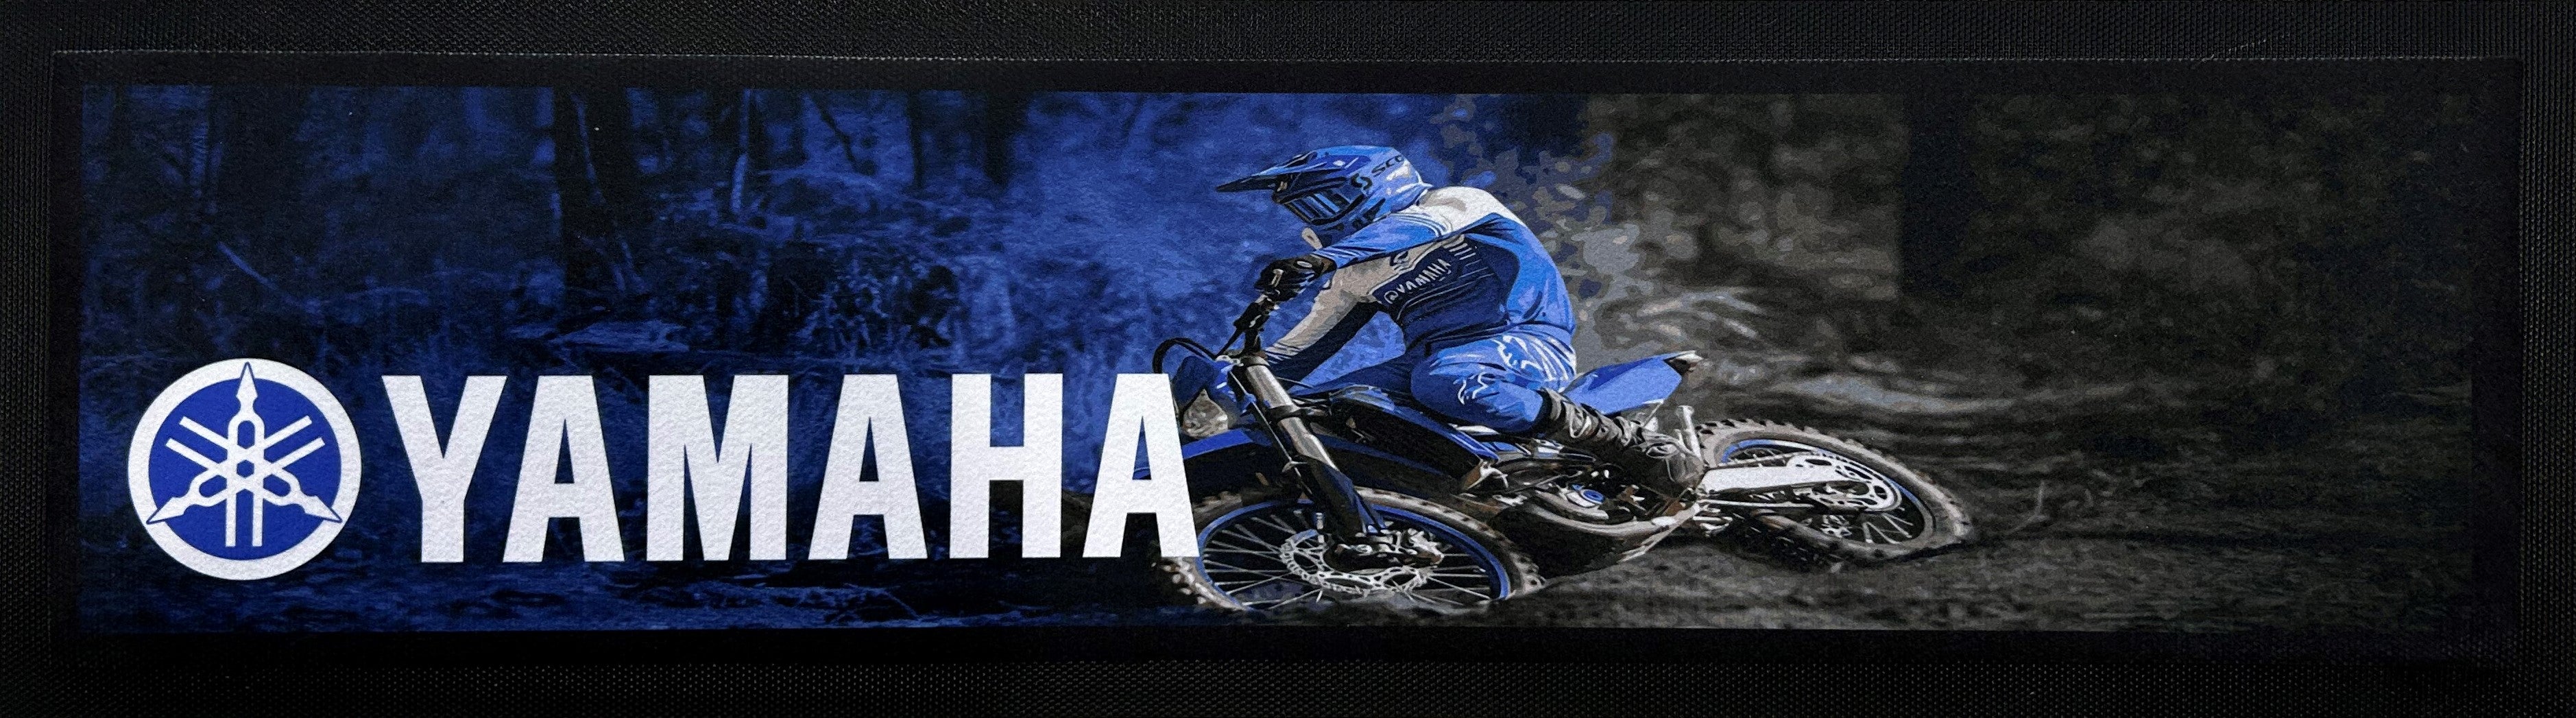 Yamaha Motorcycles Premium Rubber-Backed Bar Mat Runner